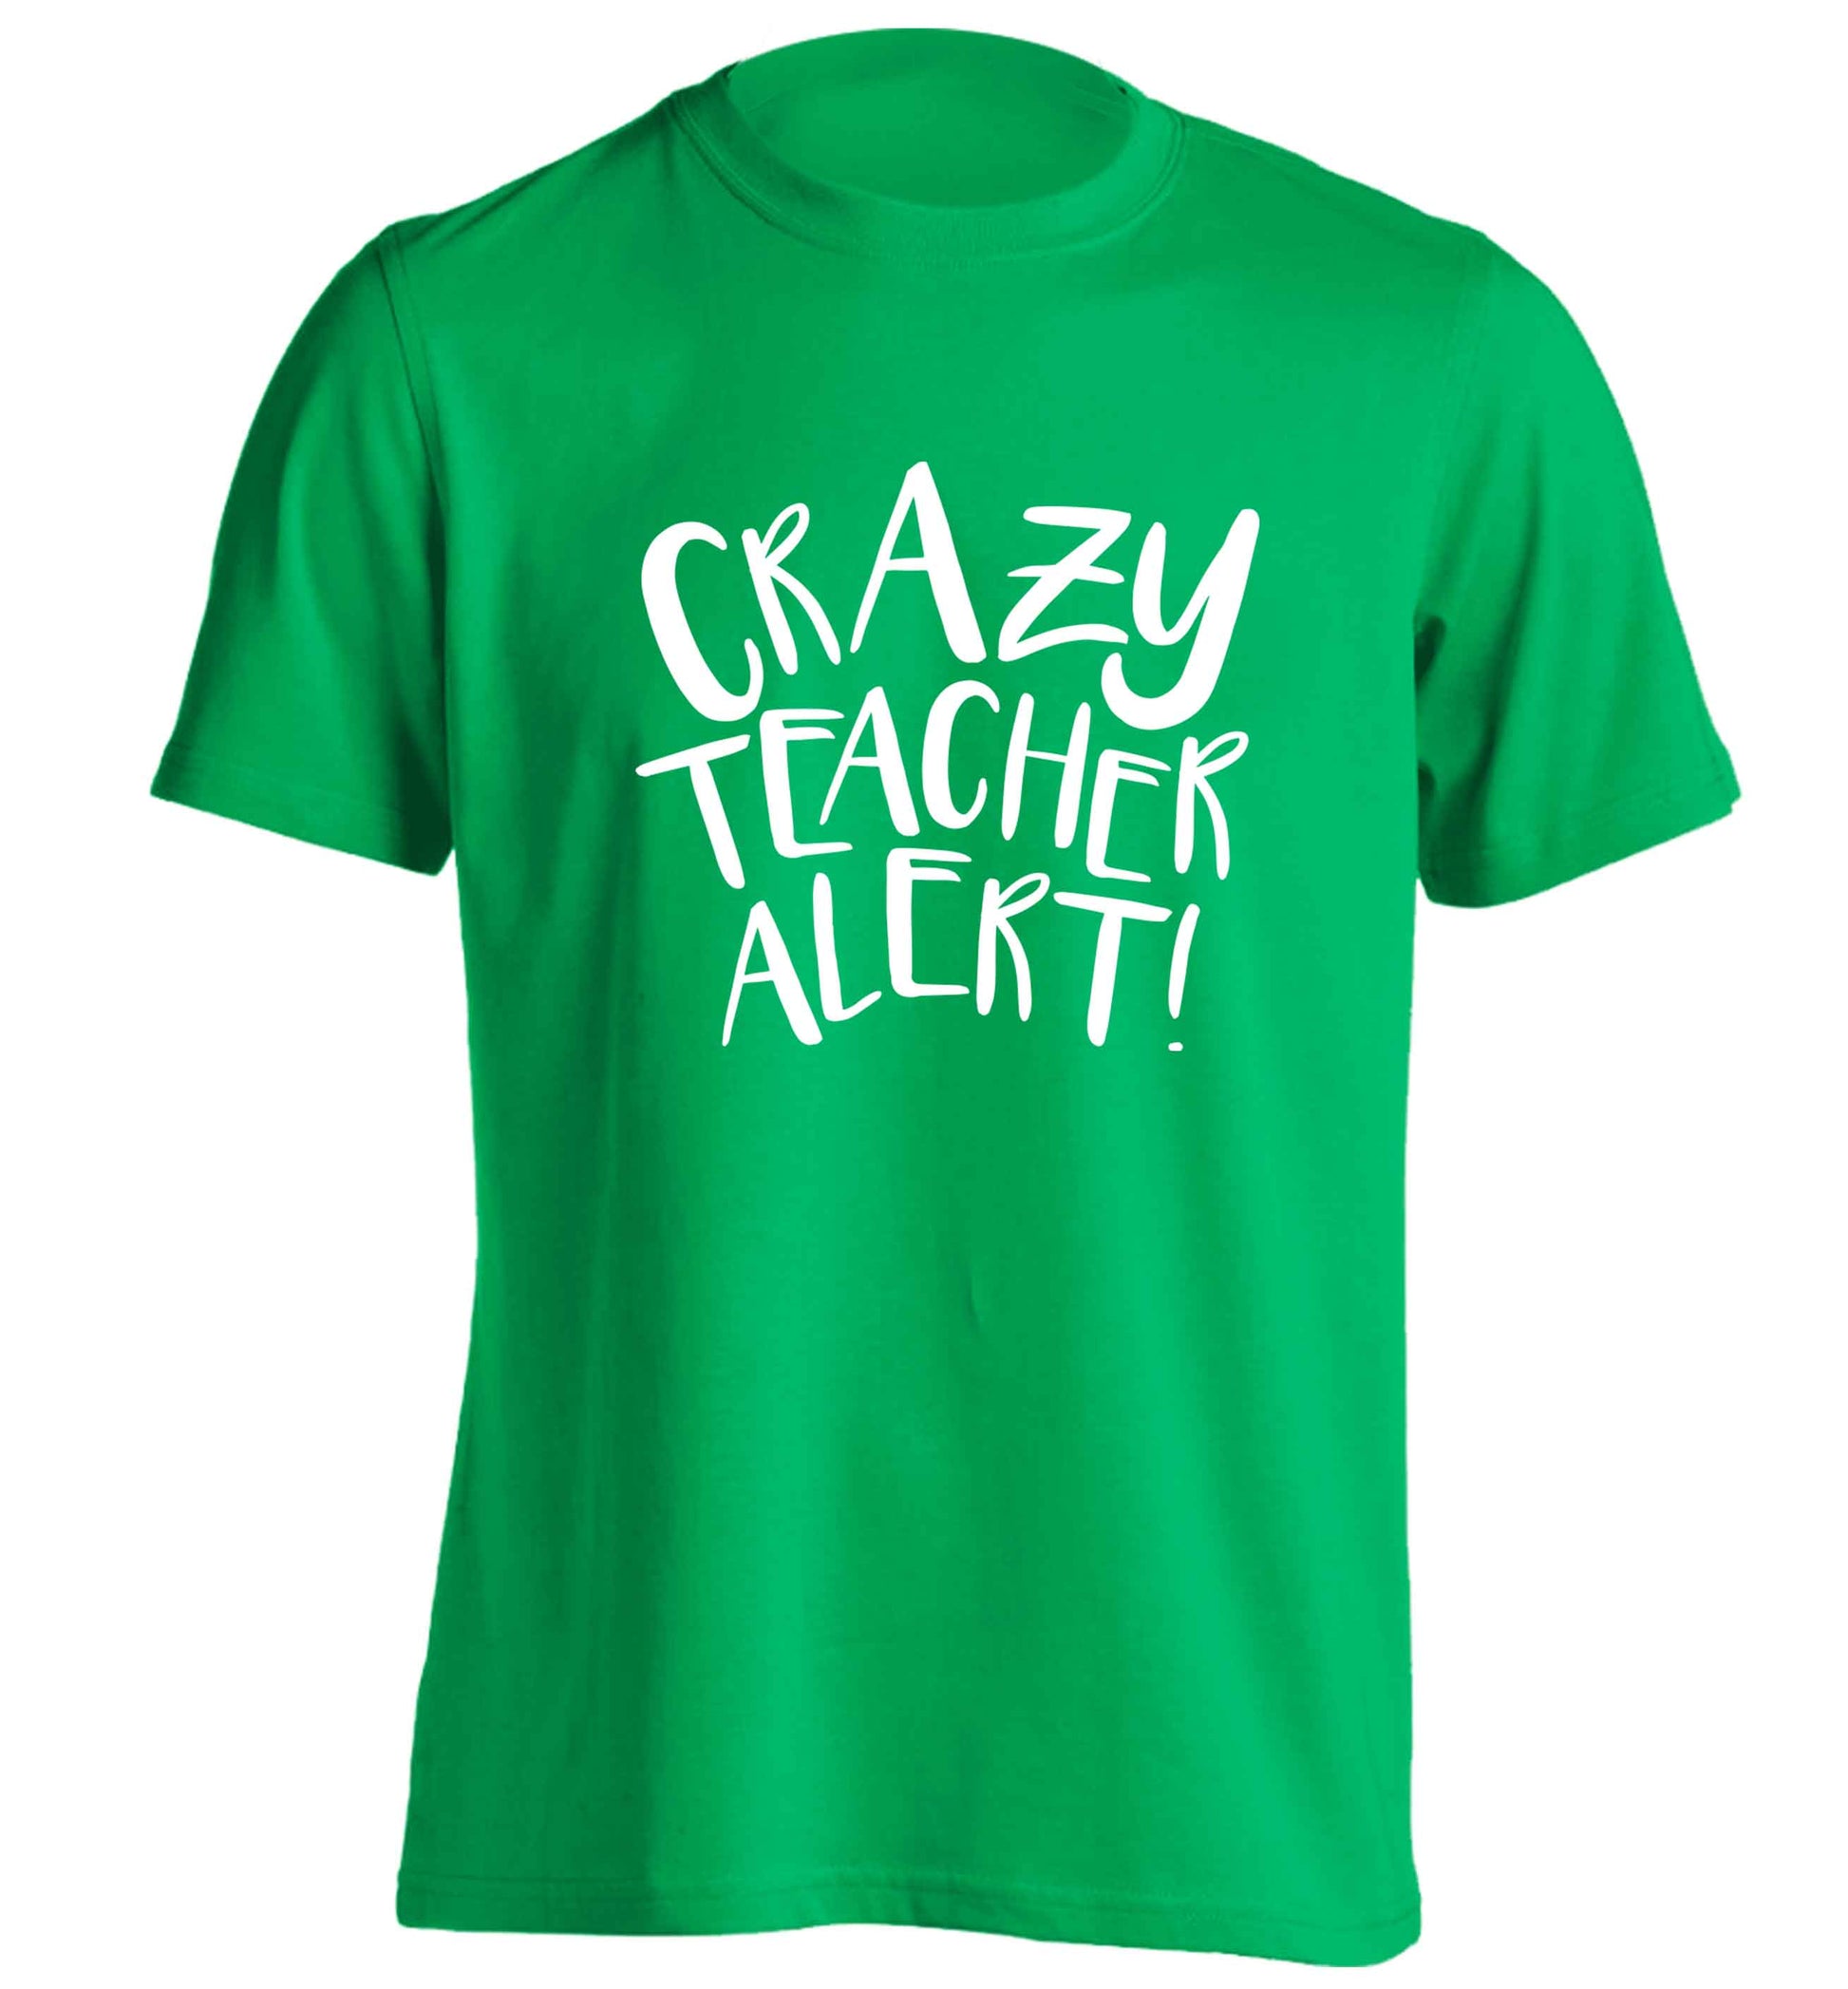 Crazy teacher alert adults unisex green Tshirt 2XL